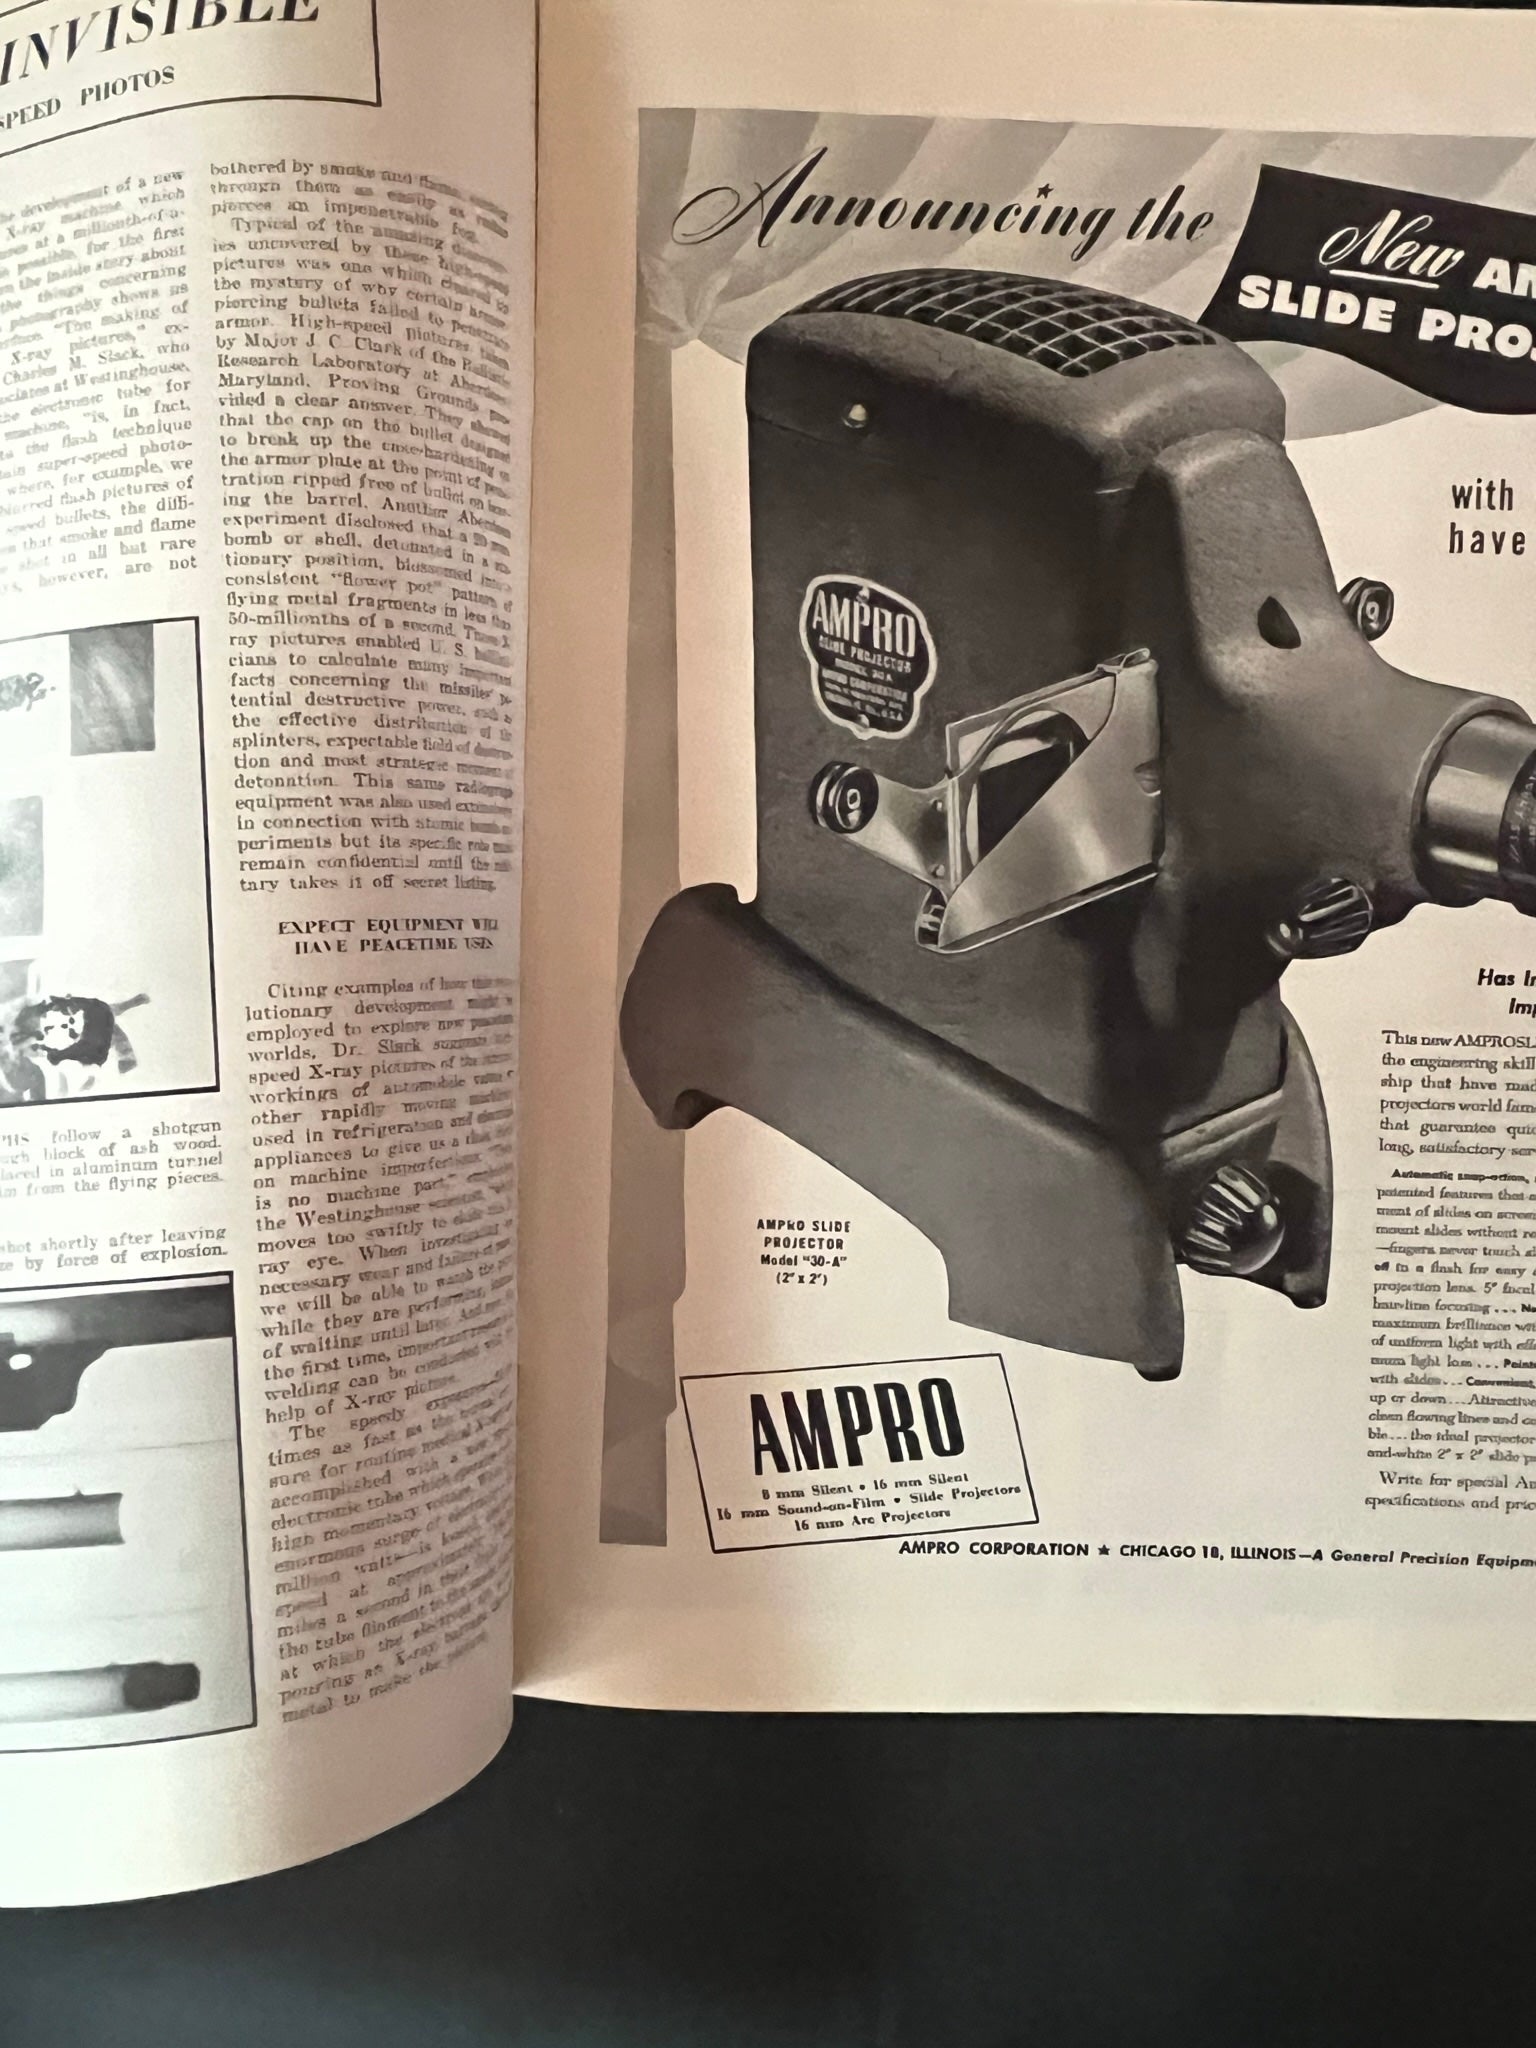 U.S. Camera November 1946 - Vibrant College Pennant Cover Design-CropsyPix